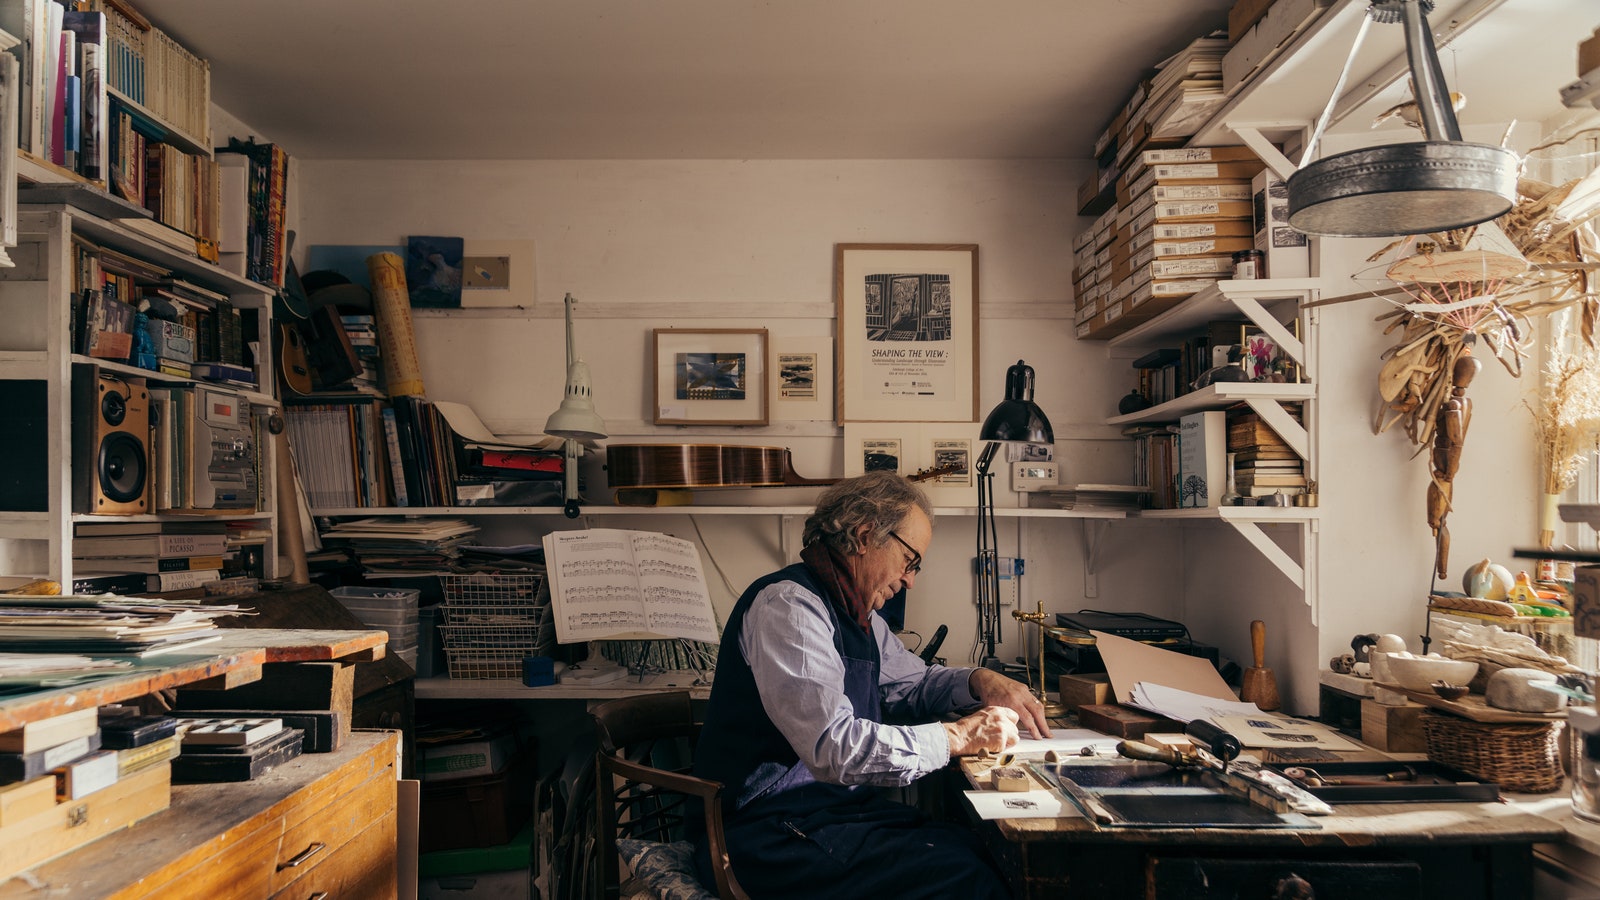 Jonathan Gibbs’s engravings tell tales in his Edinburgh home-studio